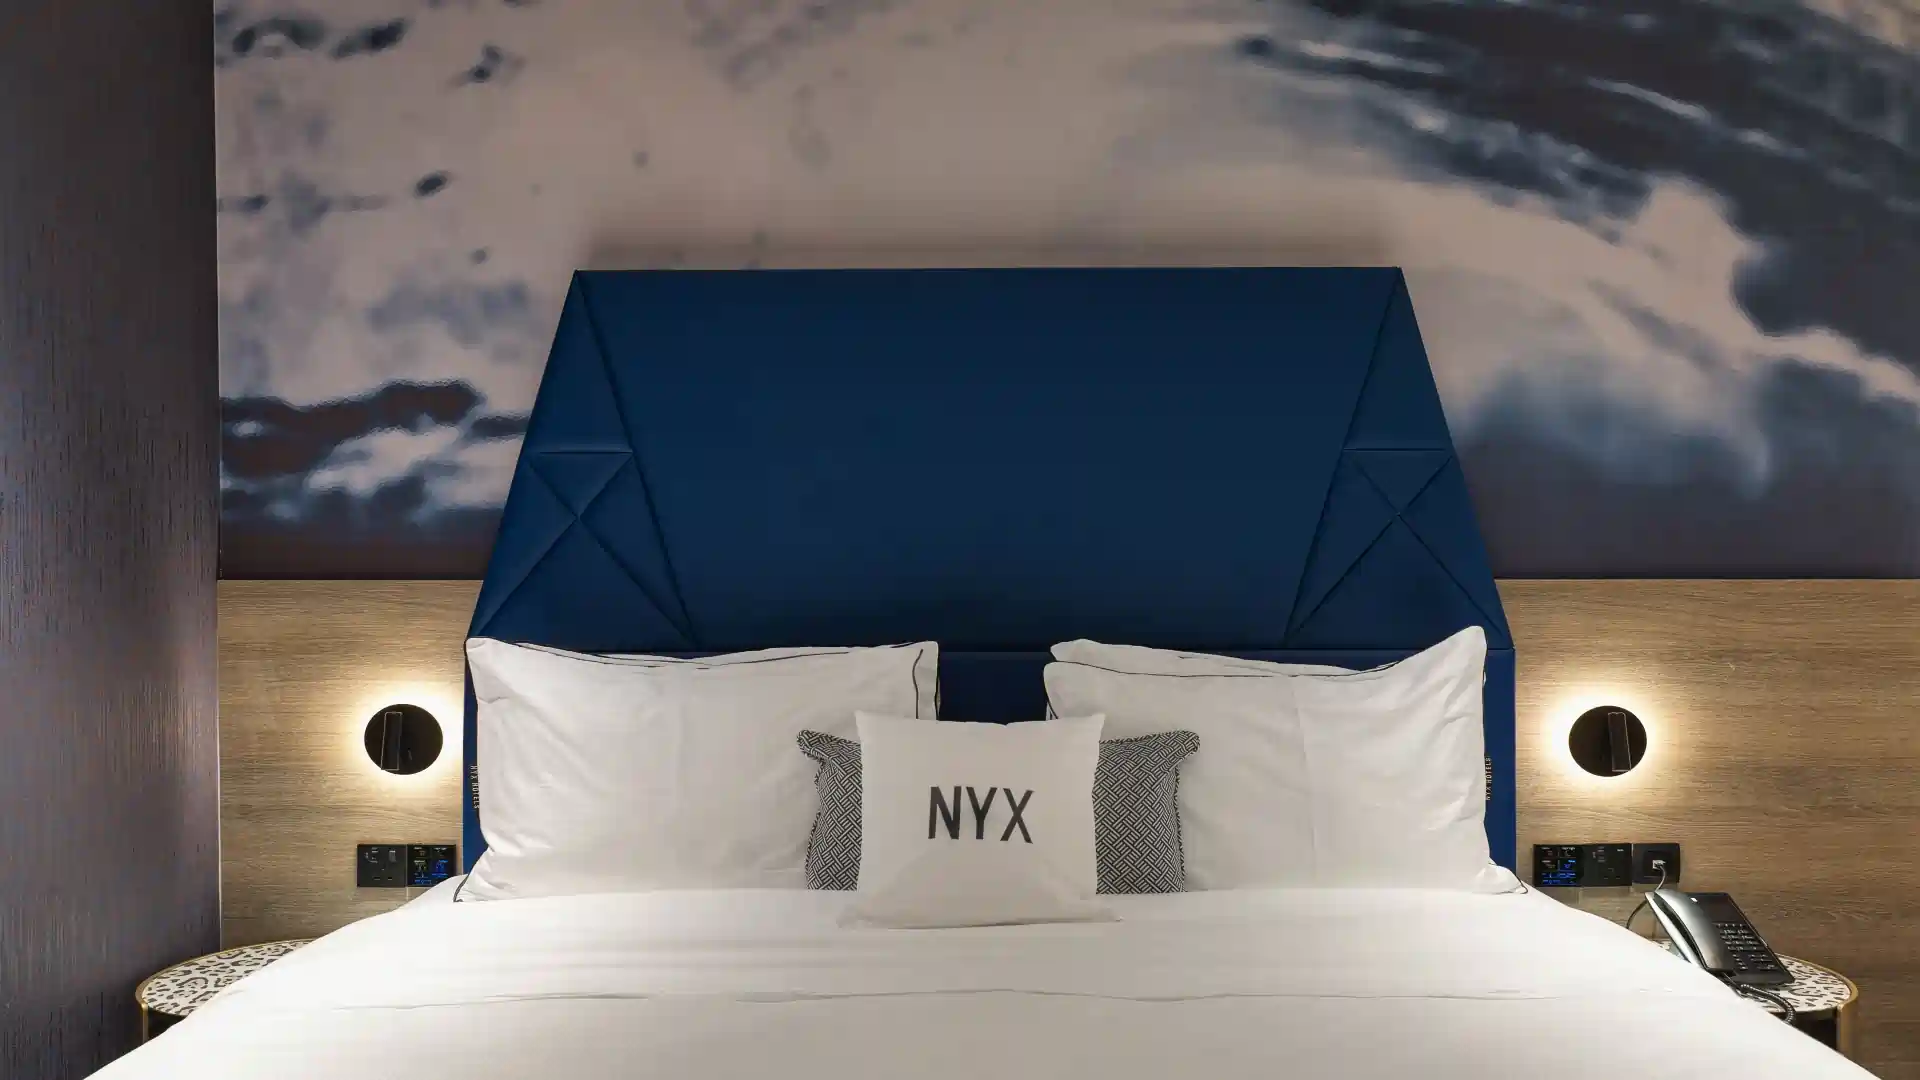 NYX Hotels - spaceExecutiveTripleRoom_01.webp